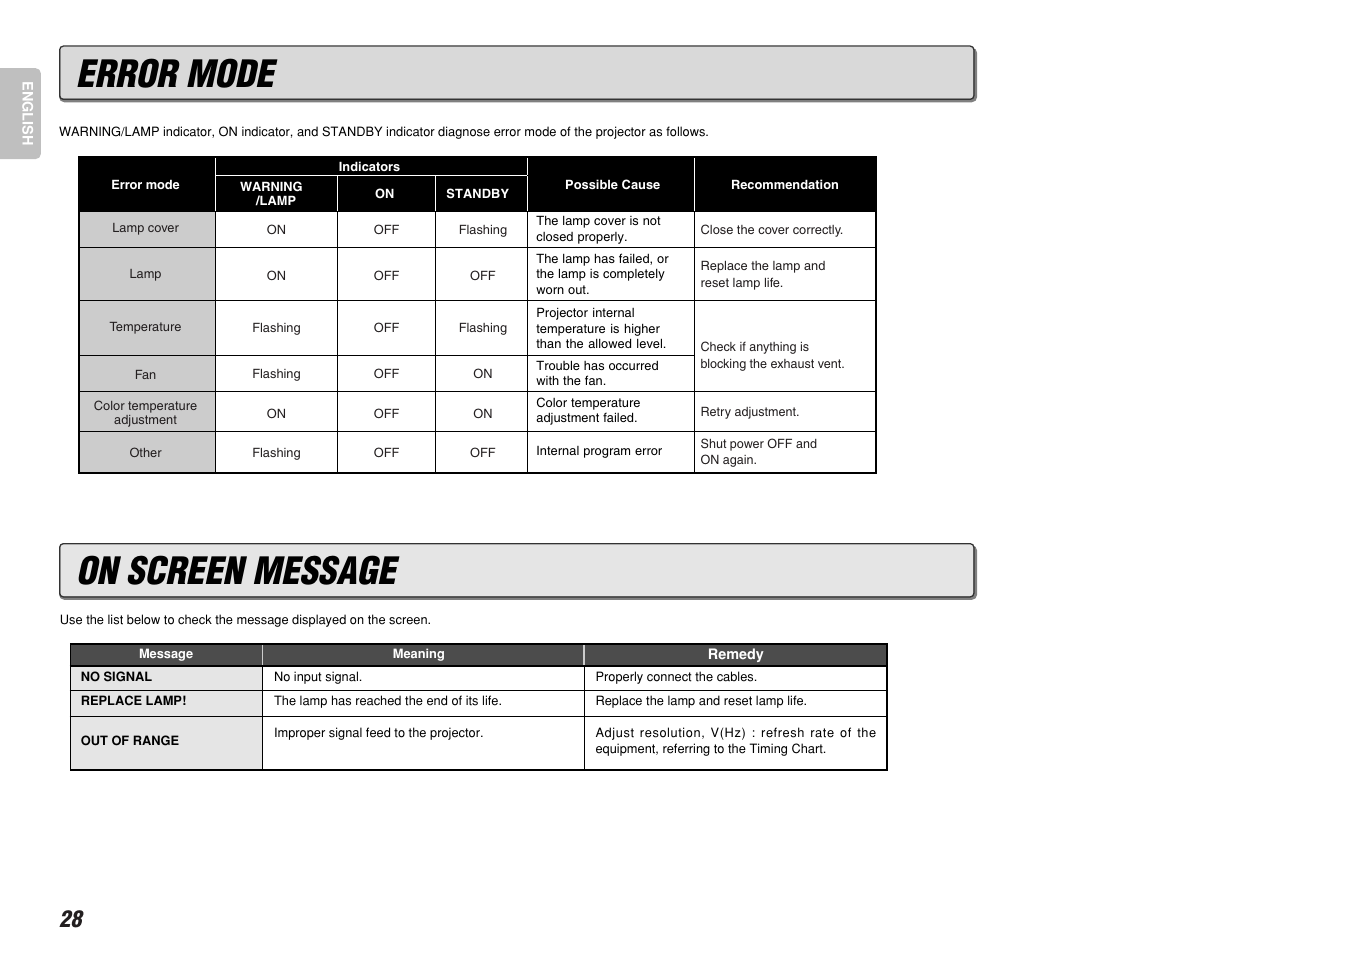 Error mode, On screen message | Marantz VP-12S4 User Manual | Page 34 / 37